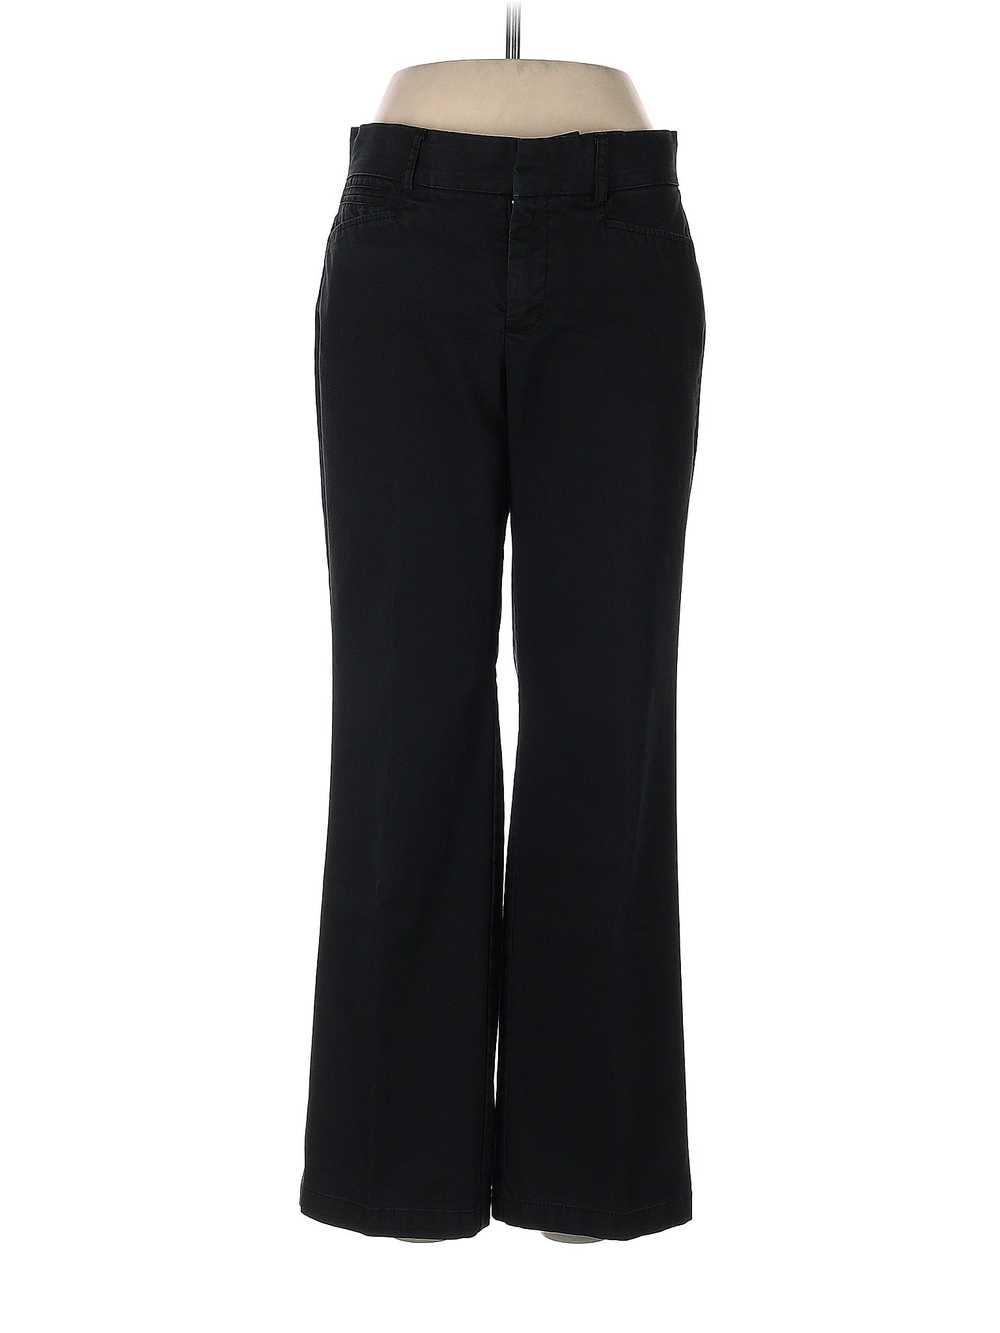 Dockers Women Black Casual Pants 6 - image 1